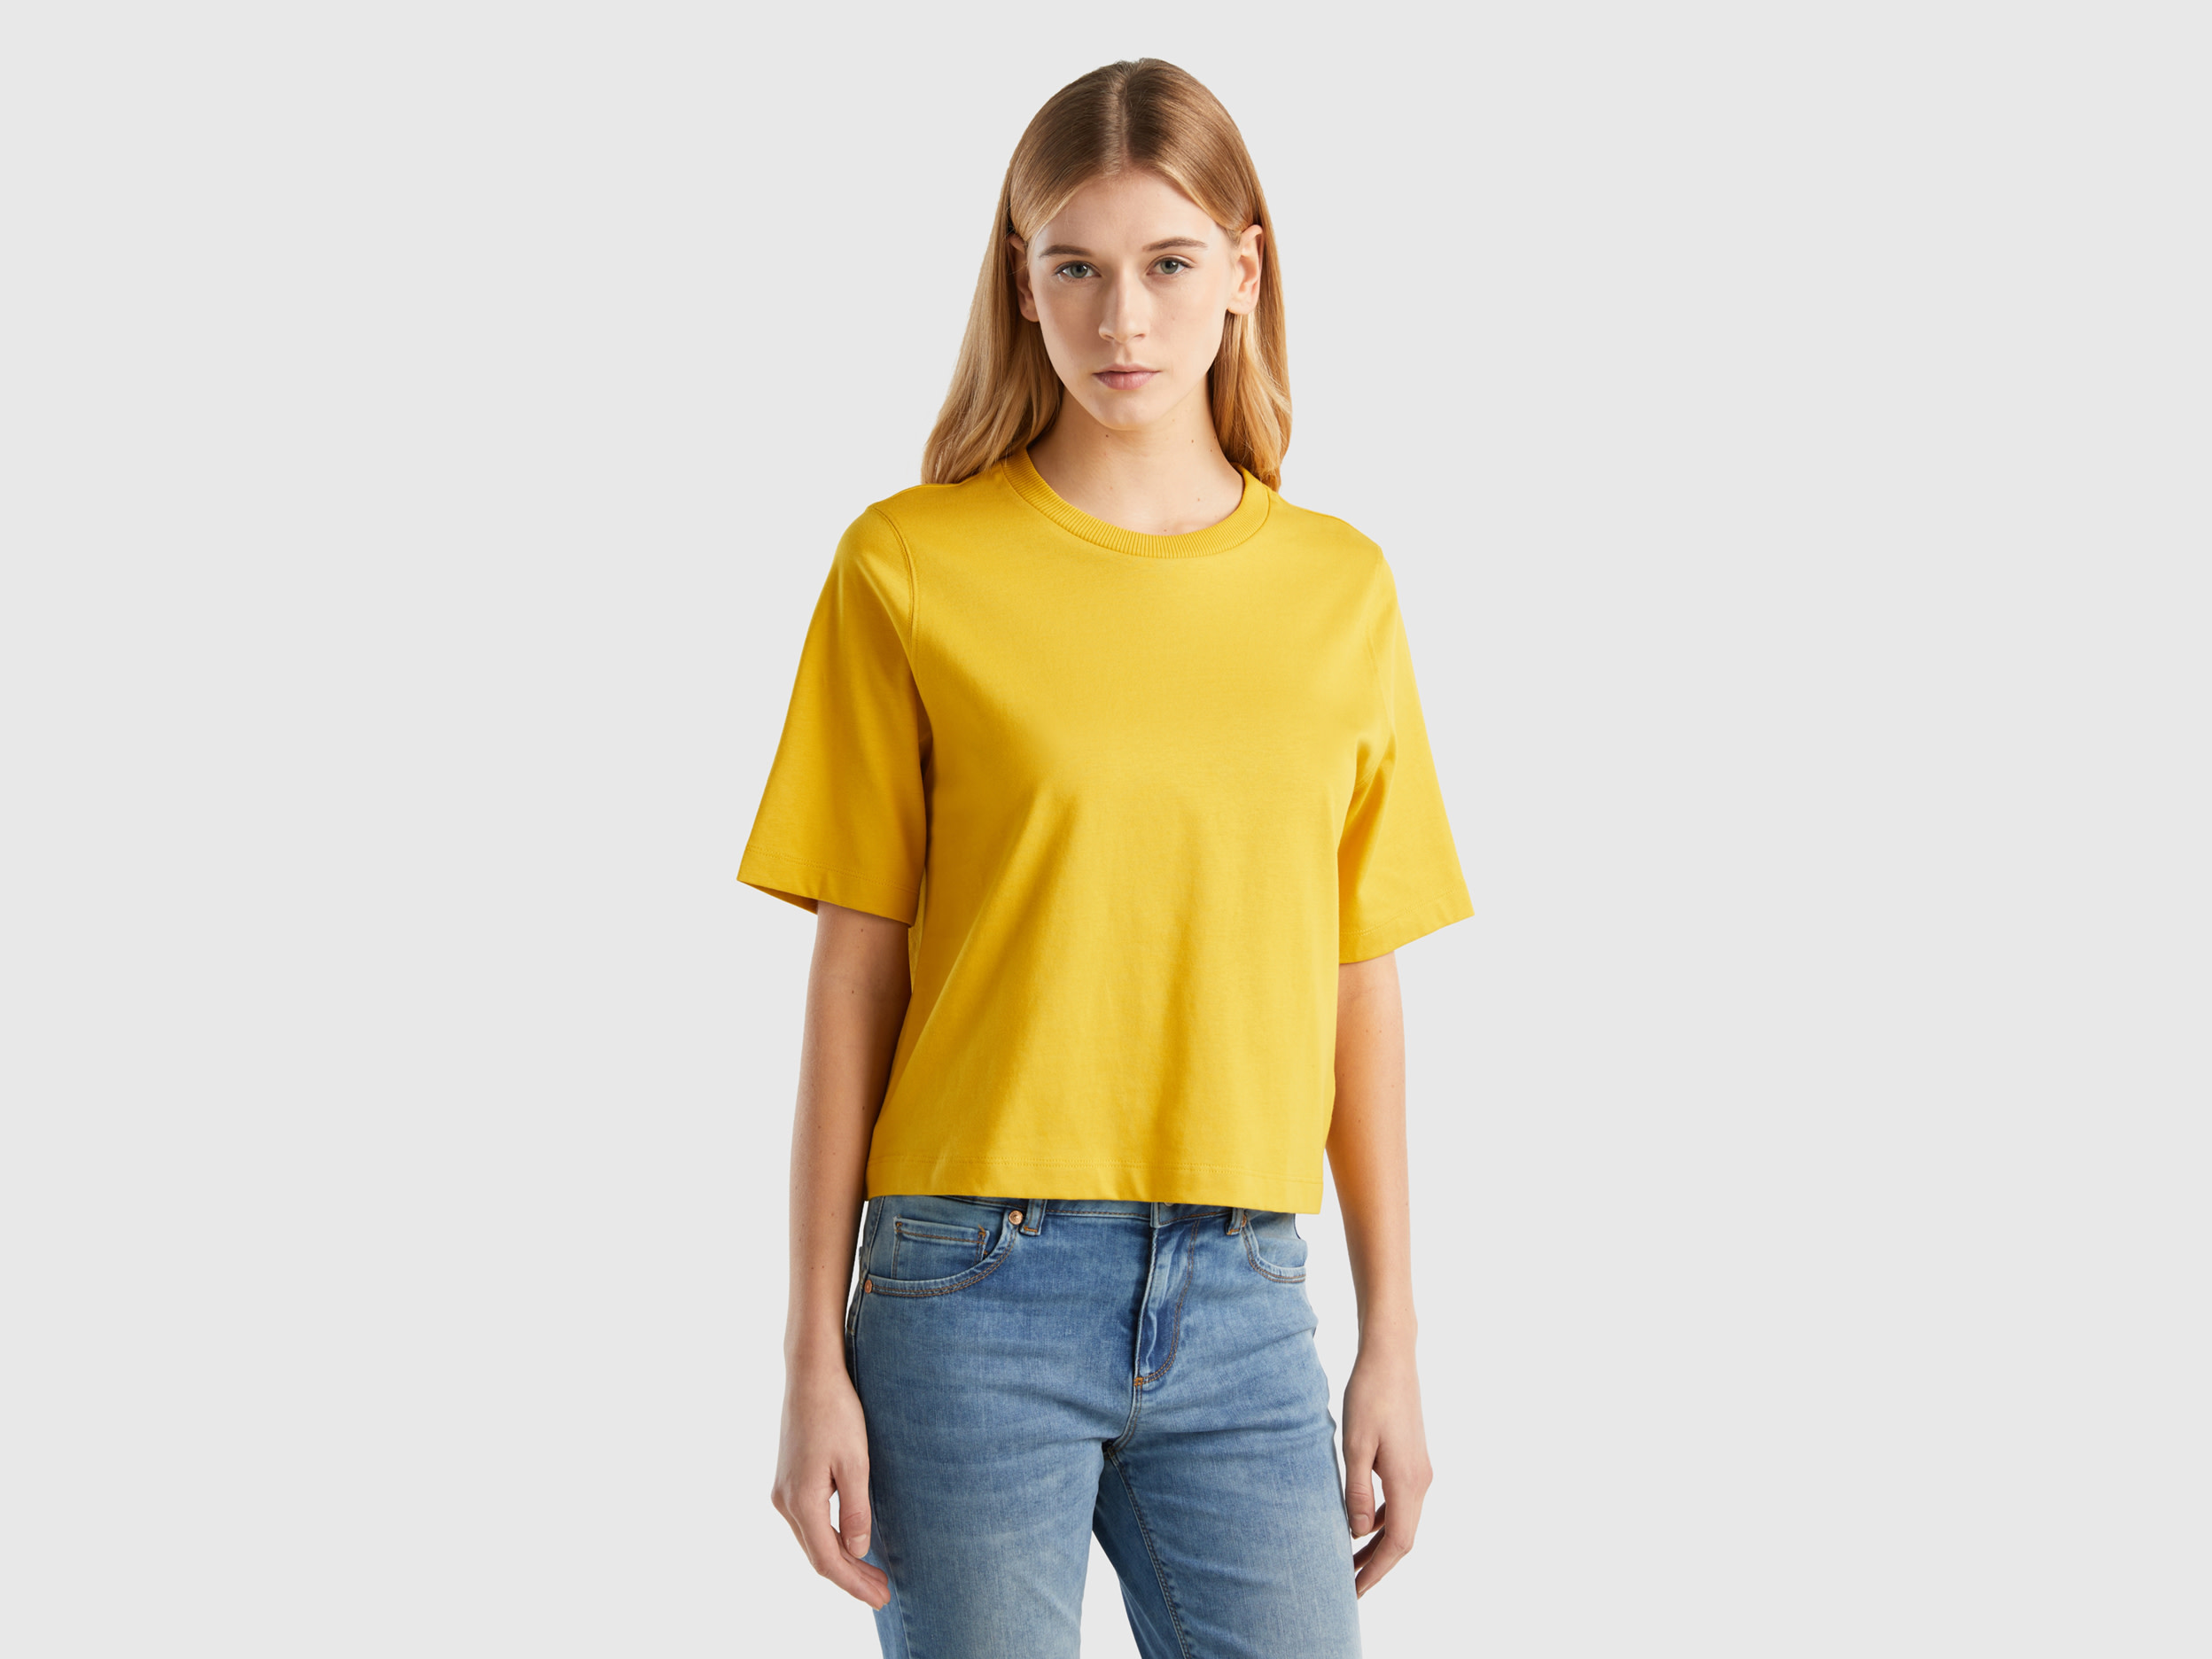 Benetton, 100% Cotton Boxy Fit T-shirt, size S, Yellow, Women